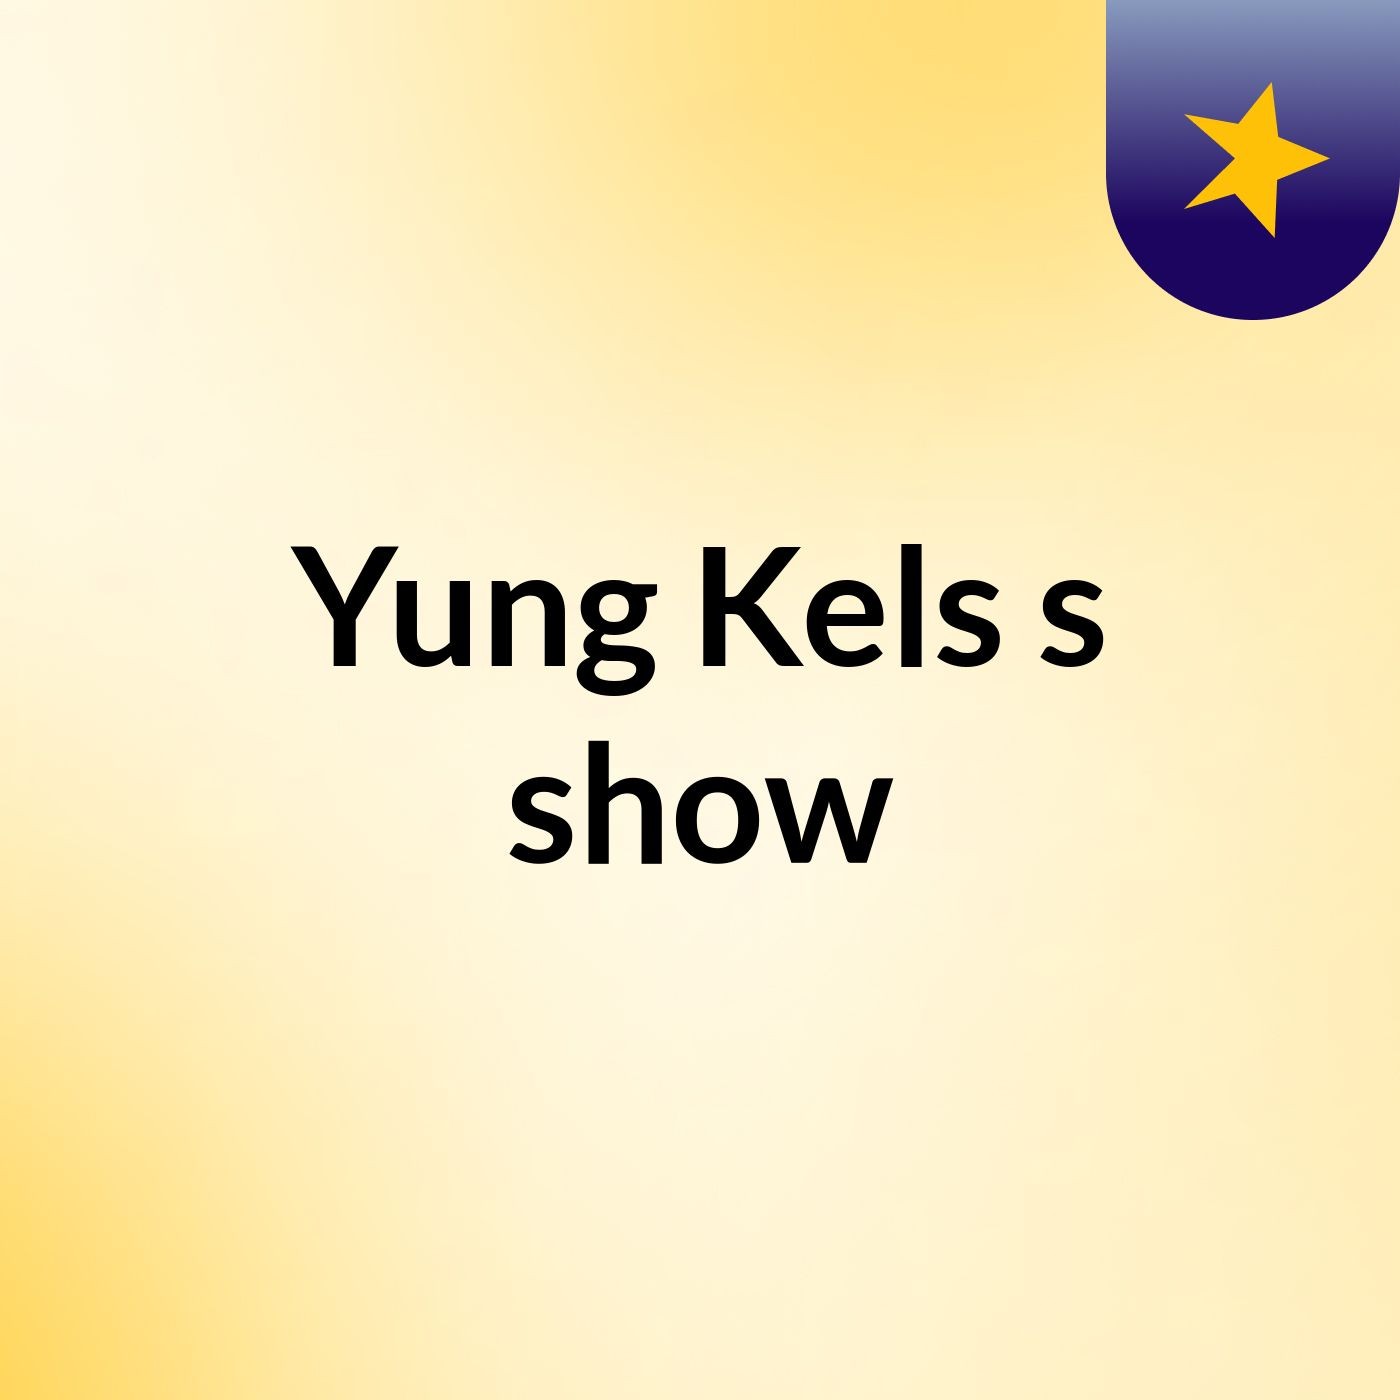 Yung Kels's show